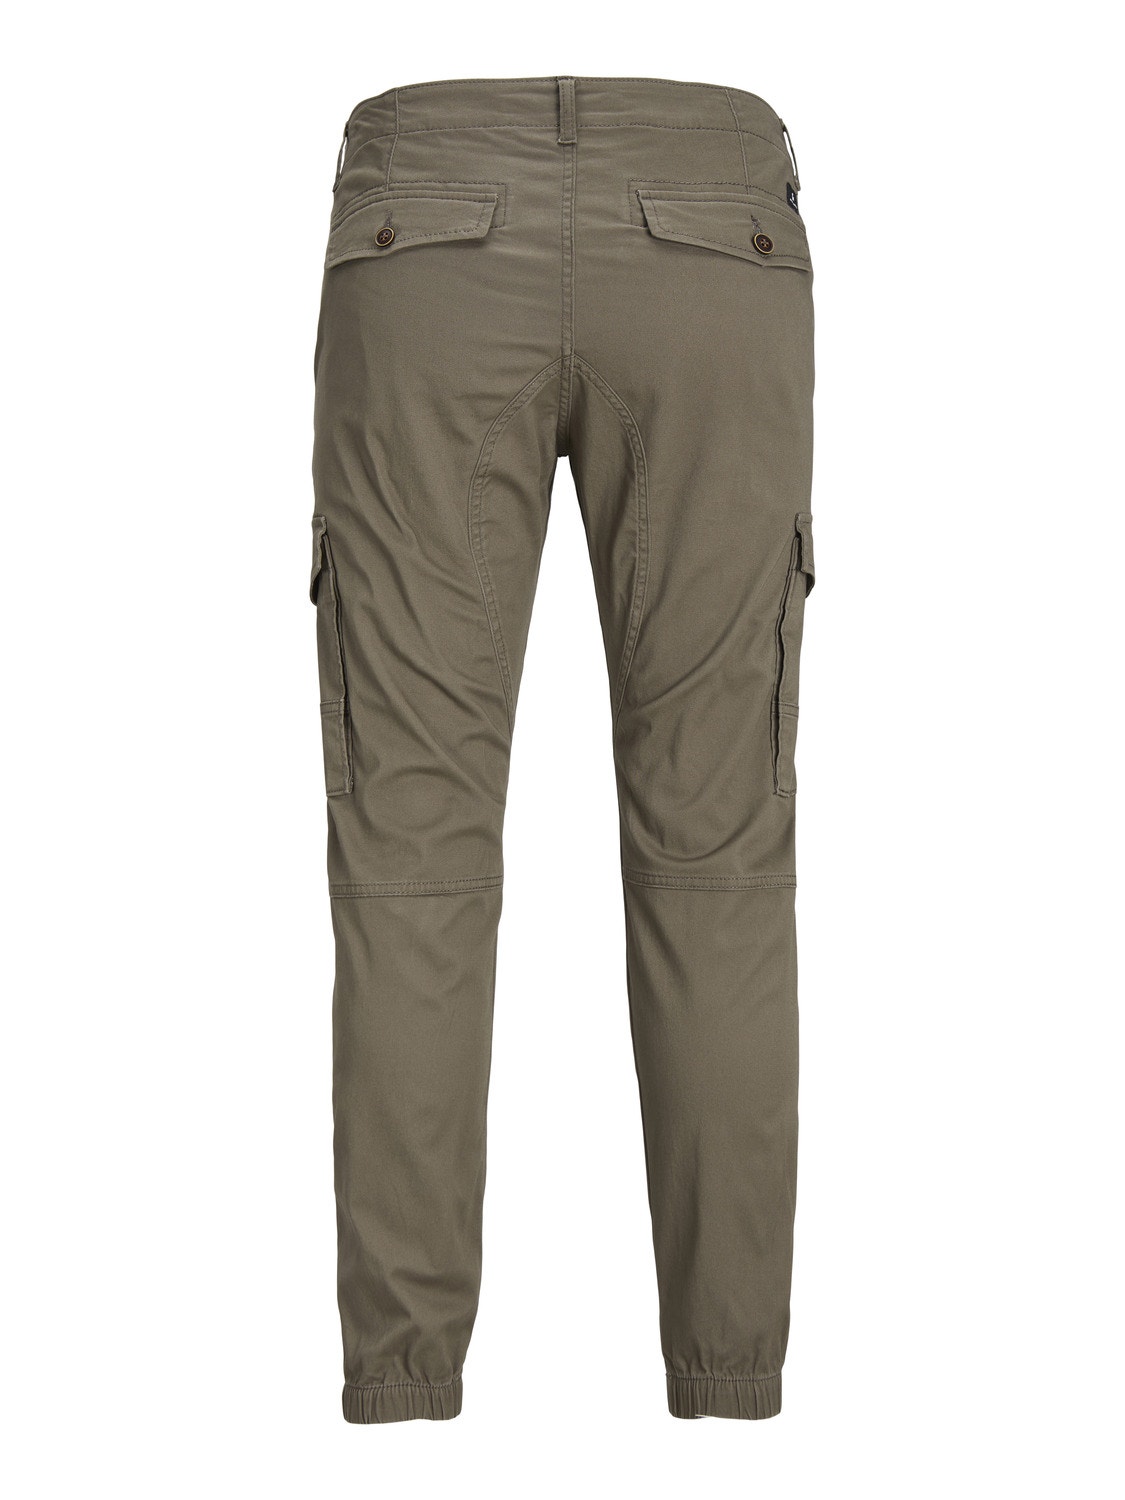 Jack & Jones Slim Fit Cargo kalhoty -Bungee Cord - 12139912